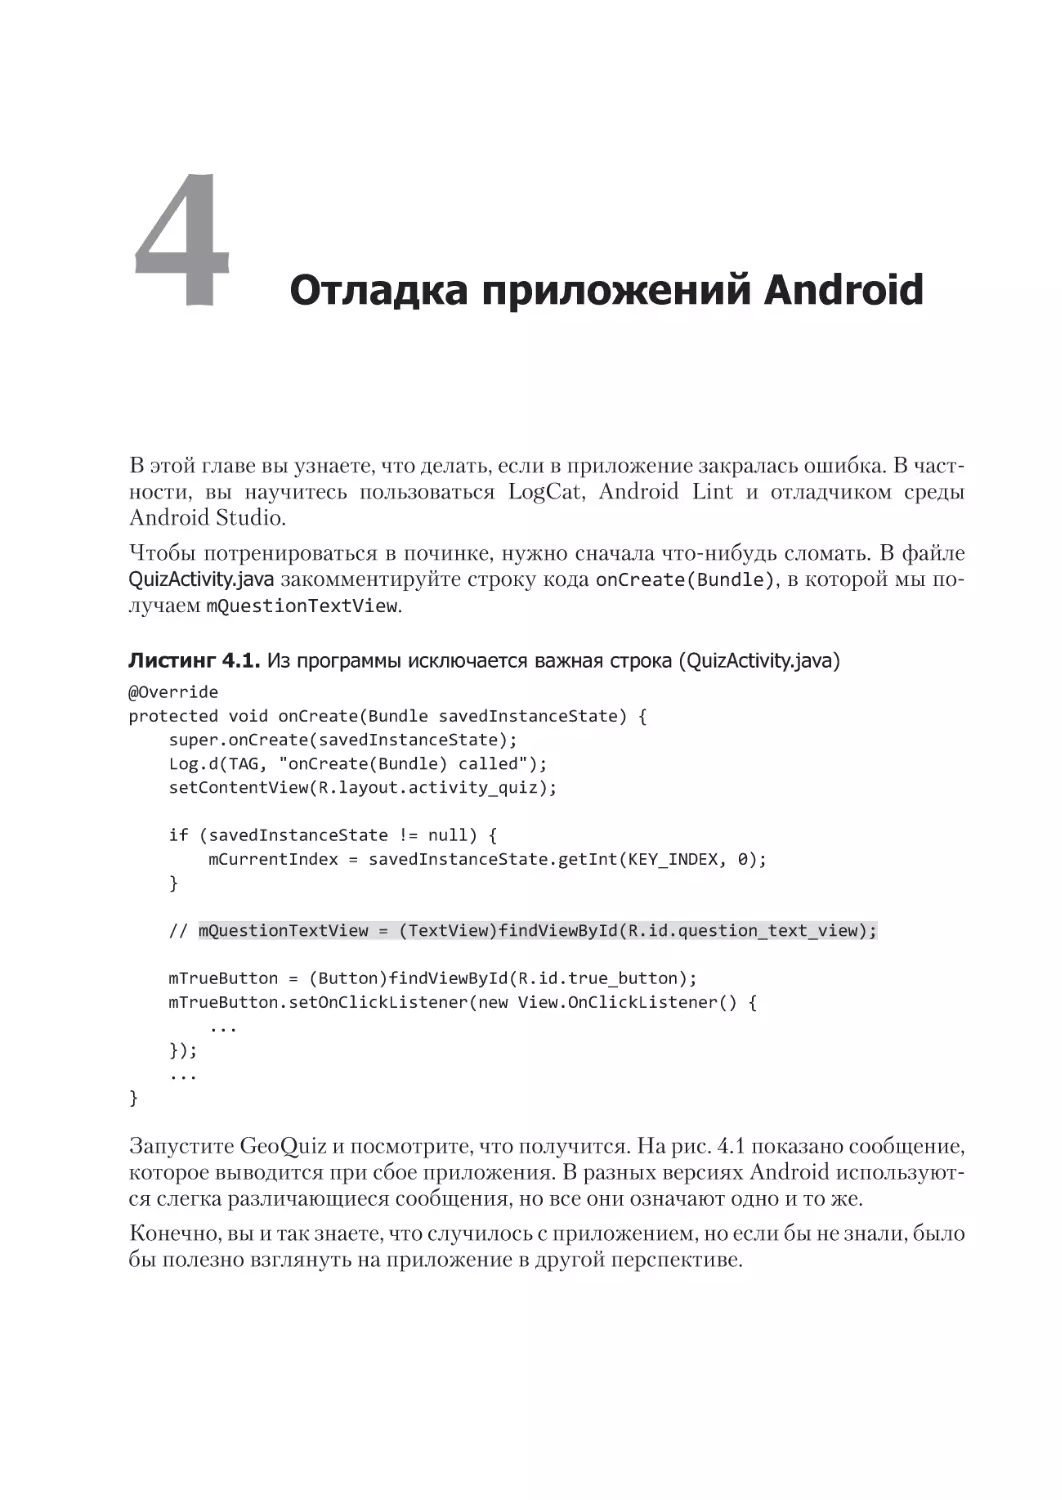 Глава 4. Отладка приложений Android